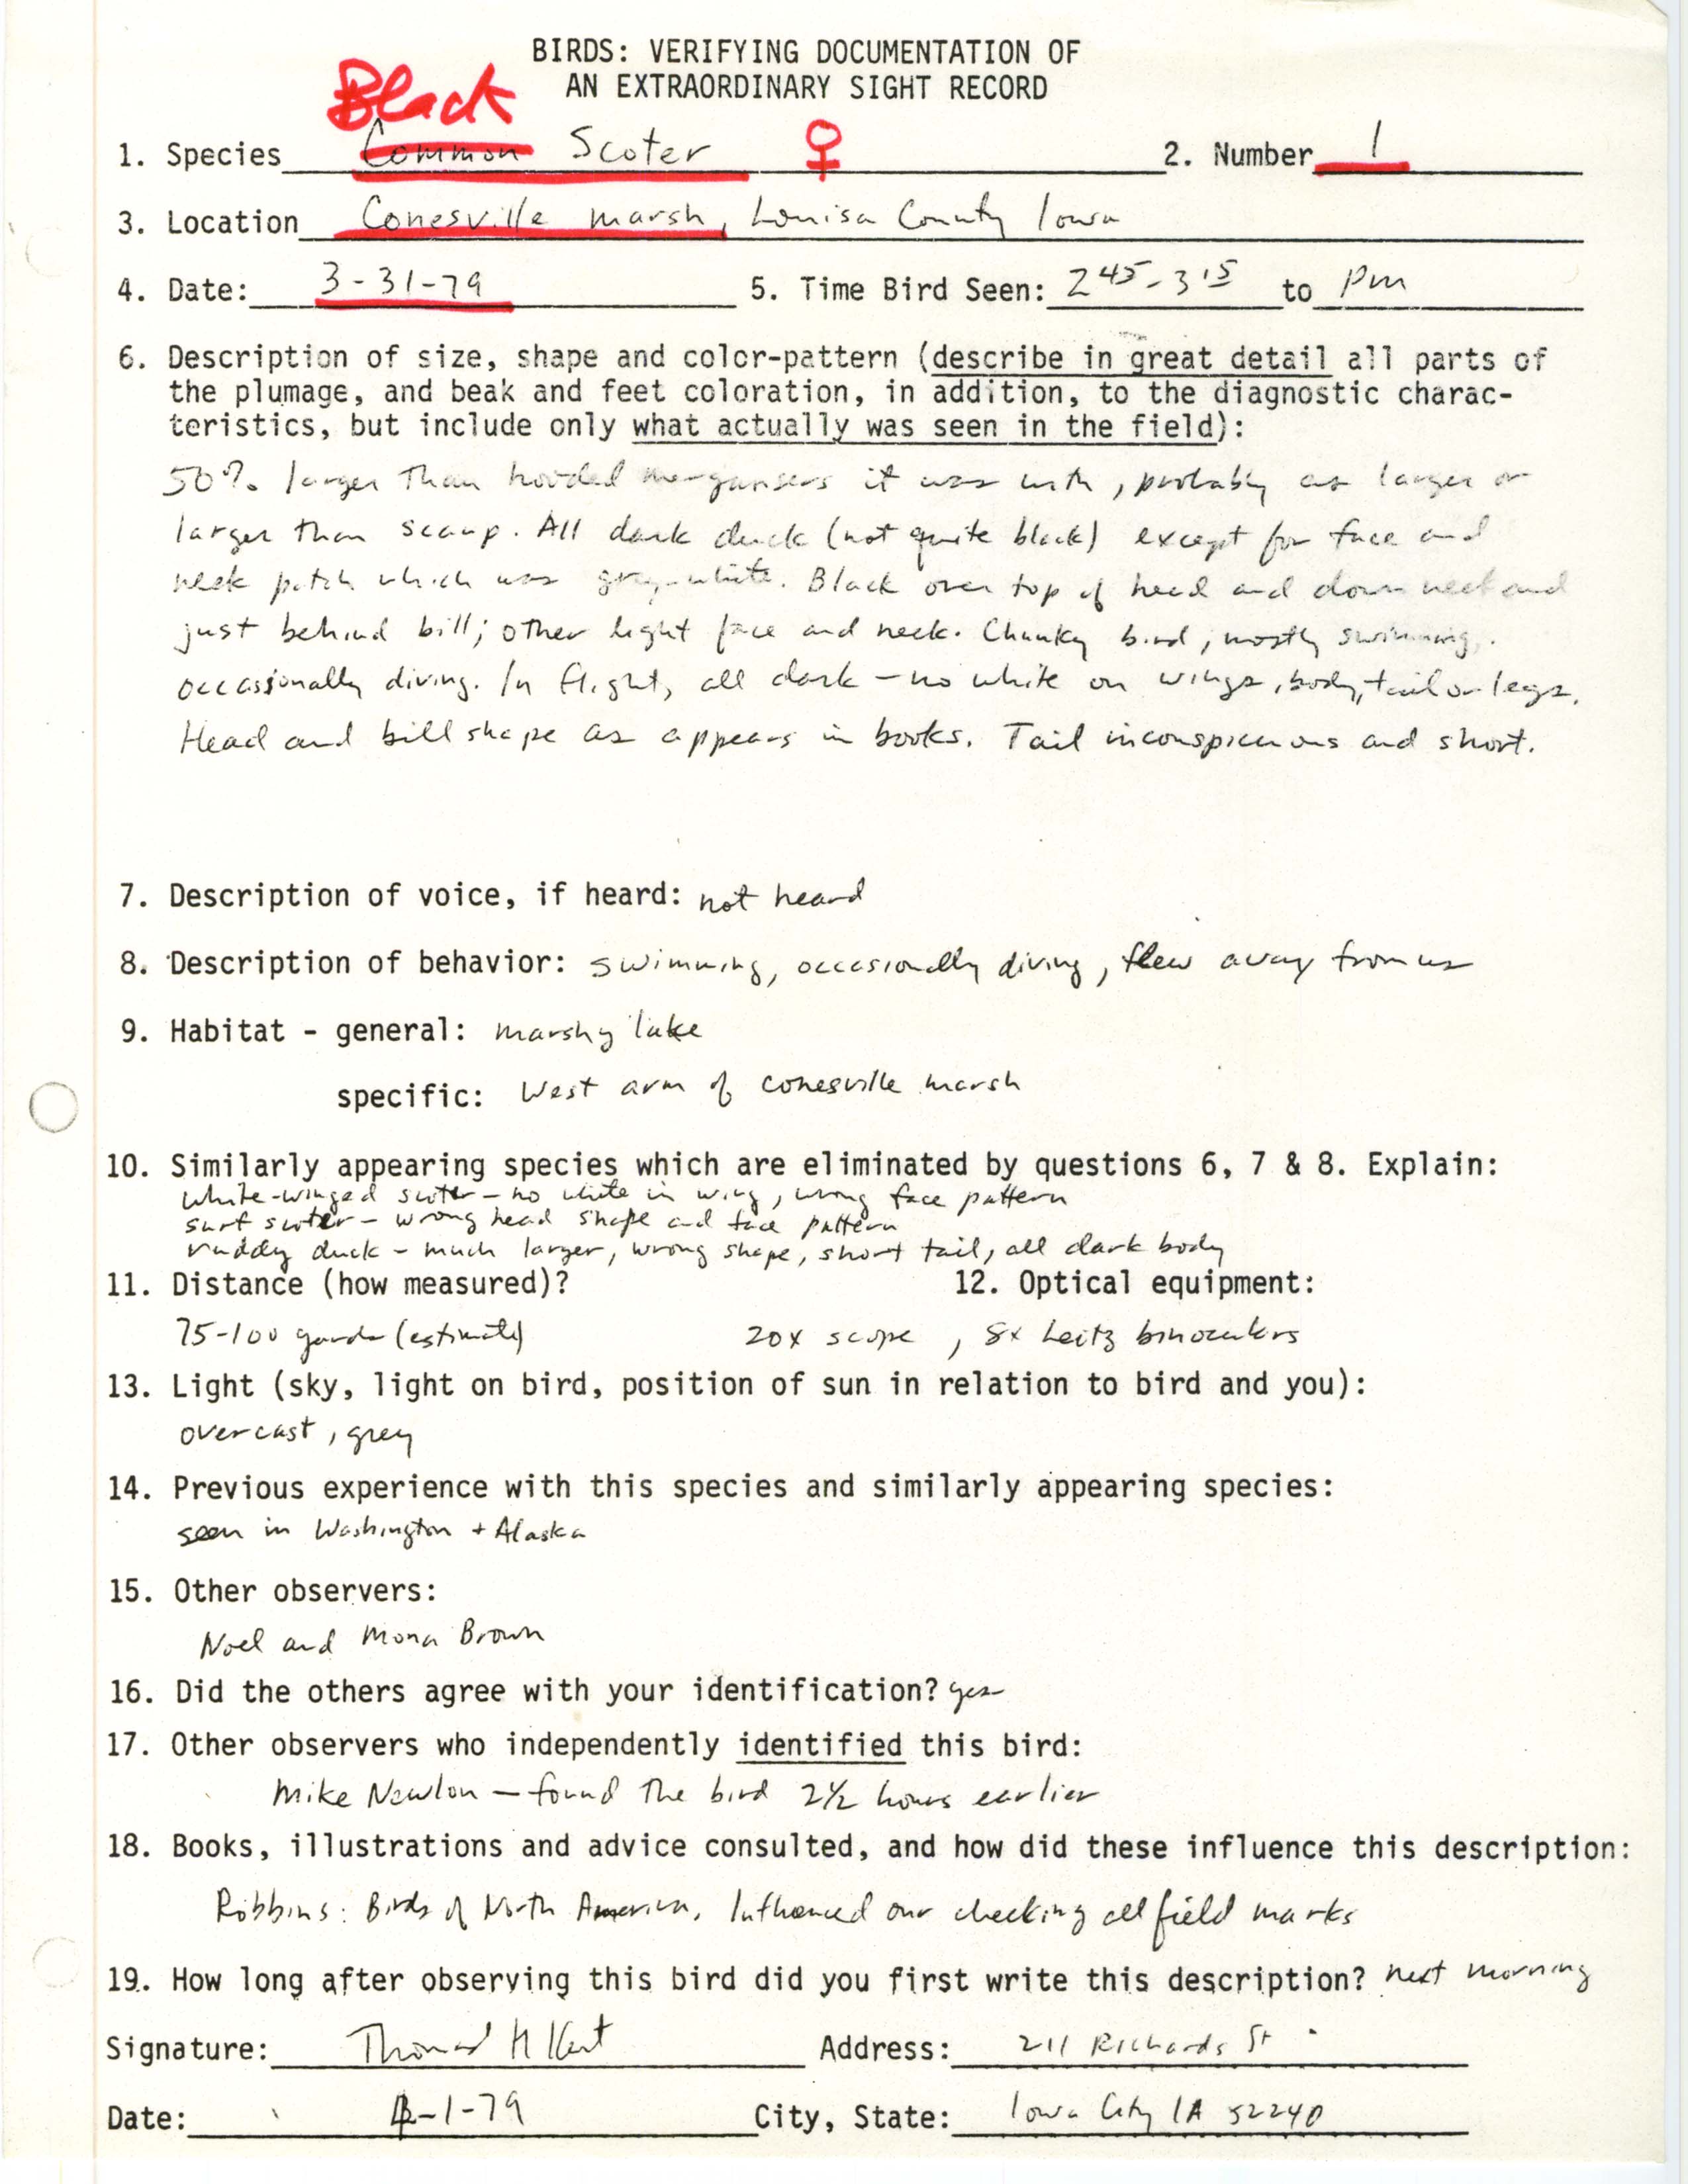 Rare bird documentation form for Black Scoter at Conesville Marsh, 1979